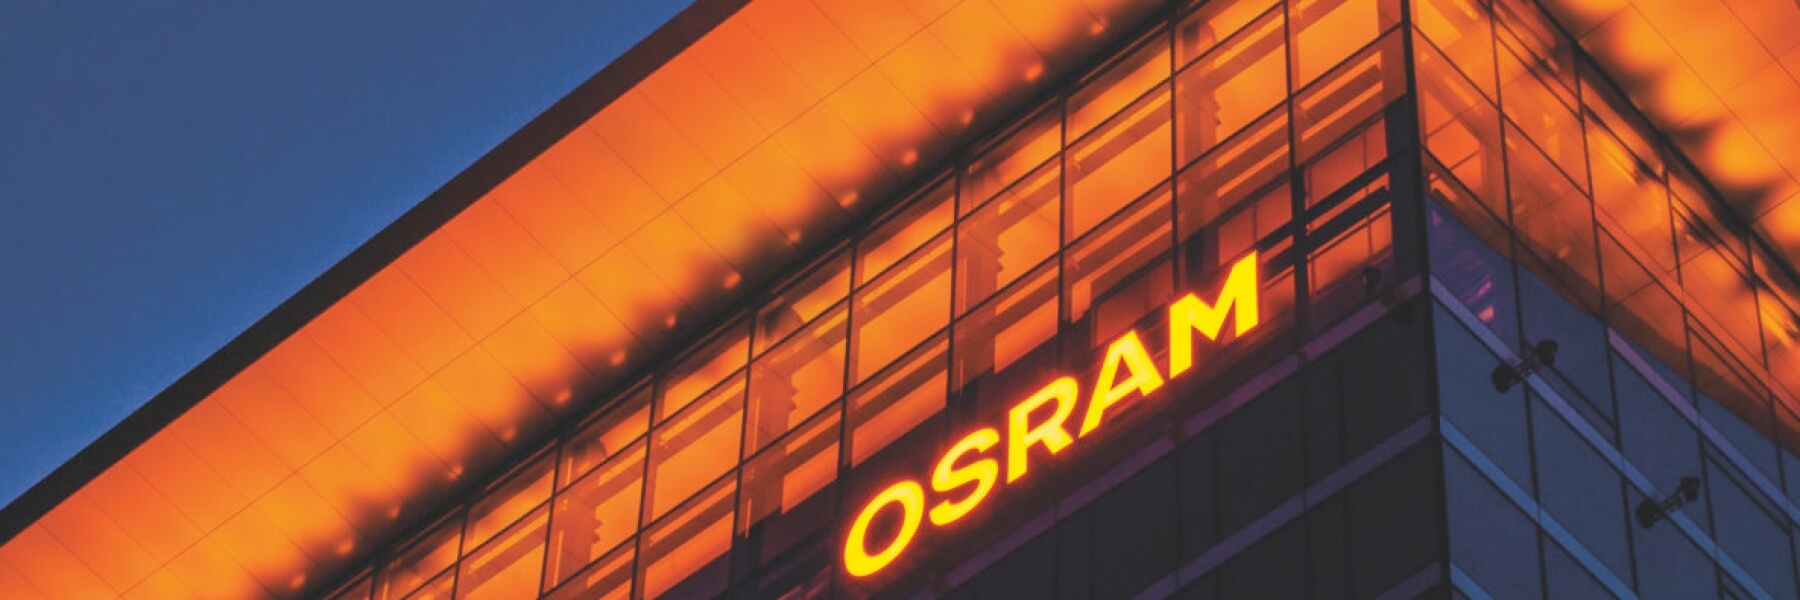 OSRAM OS SOLUTION PARTNERSHIP